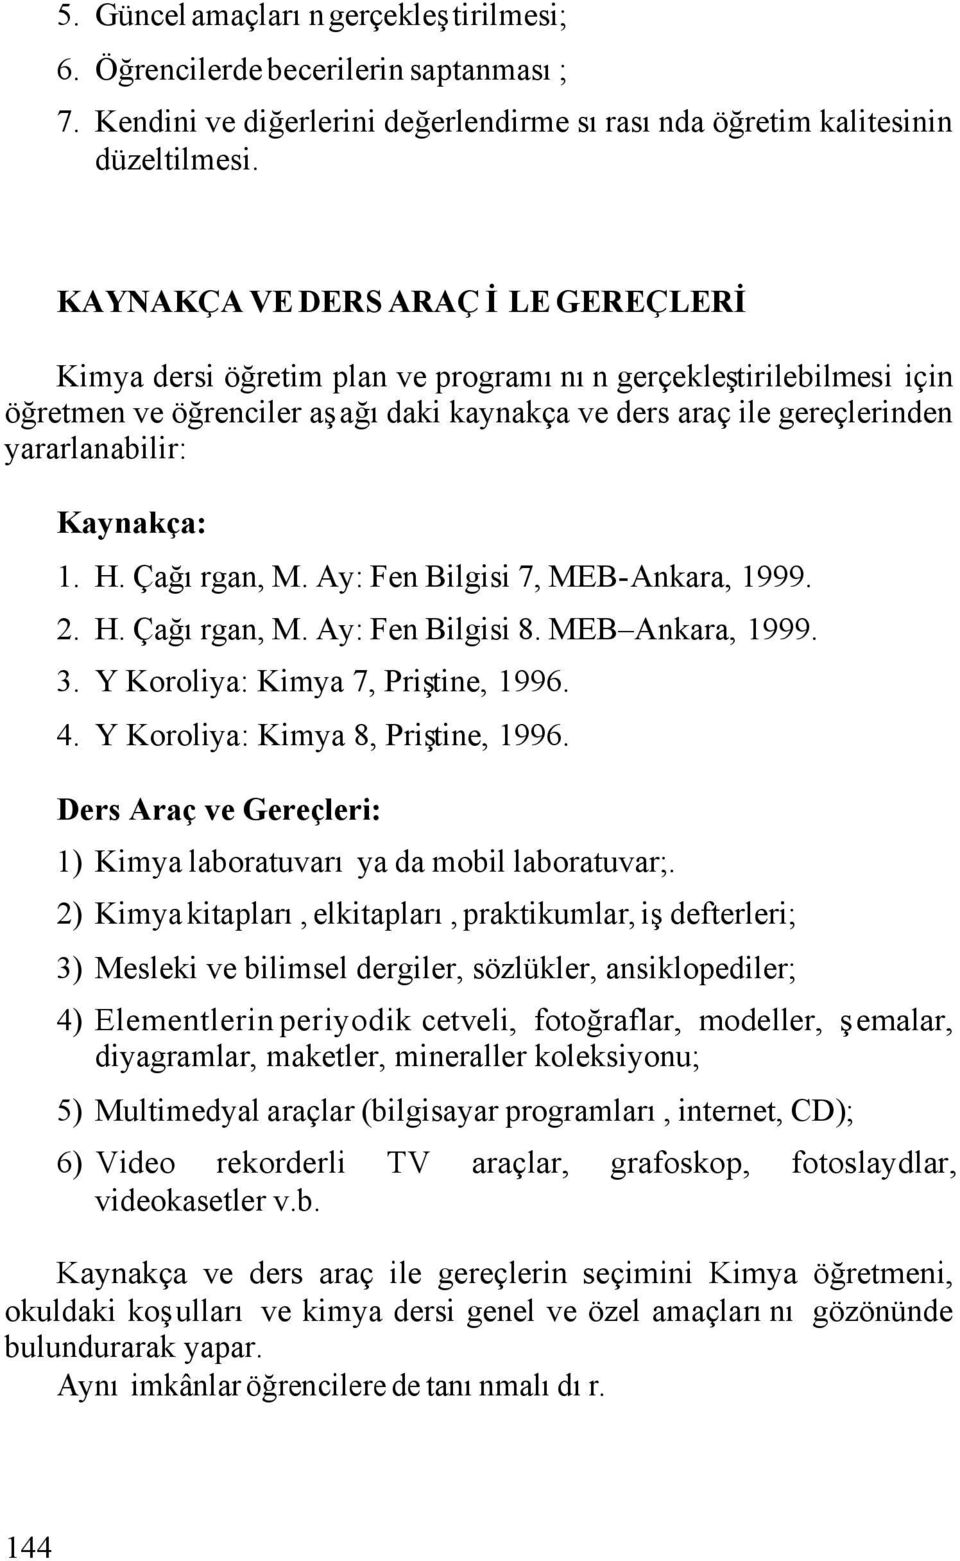 Kaynakça: 1. H. Çağırgan, M. Ay: Fen Bilgisi 7, MEB-Ankara, 1999. 2. H. Çağırgan, M. Ay: Fen Bilgisi 8. MEB Ankara, 1999. 3. Y Koroliya: Kimya 7, Priştine, 1996. 4.